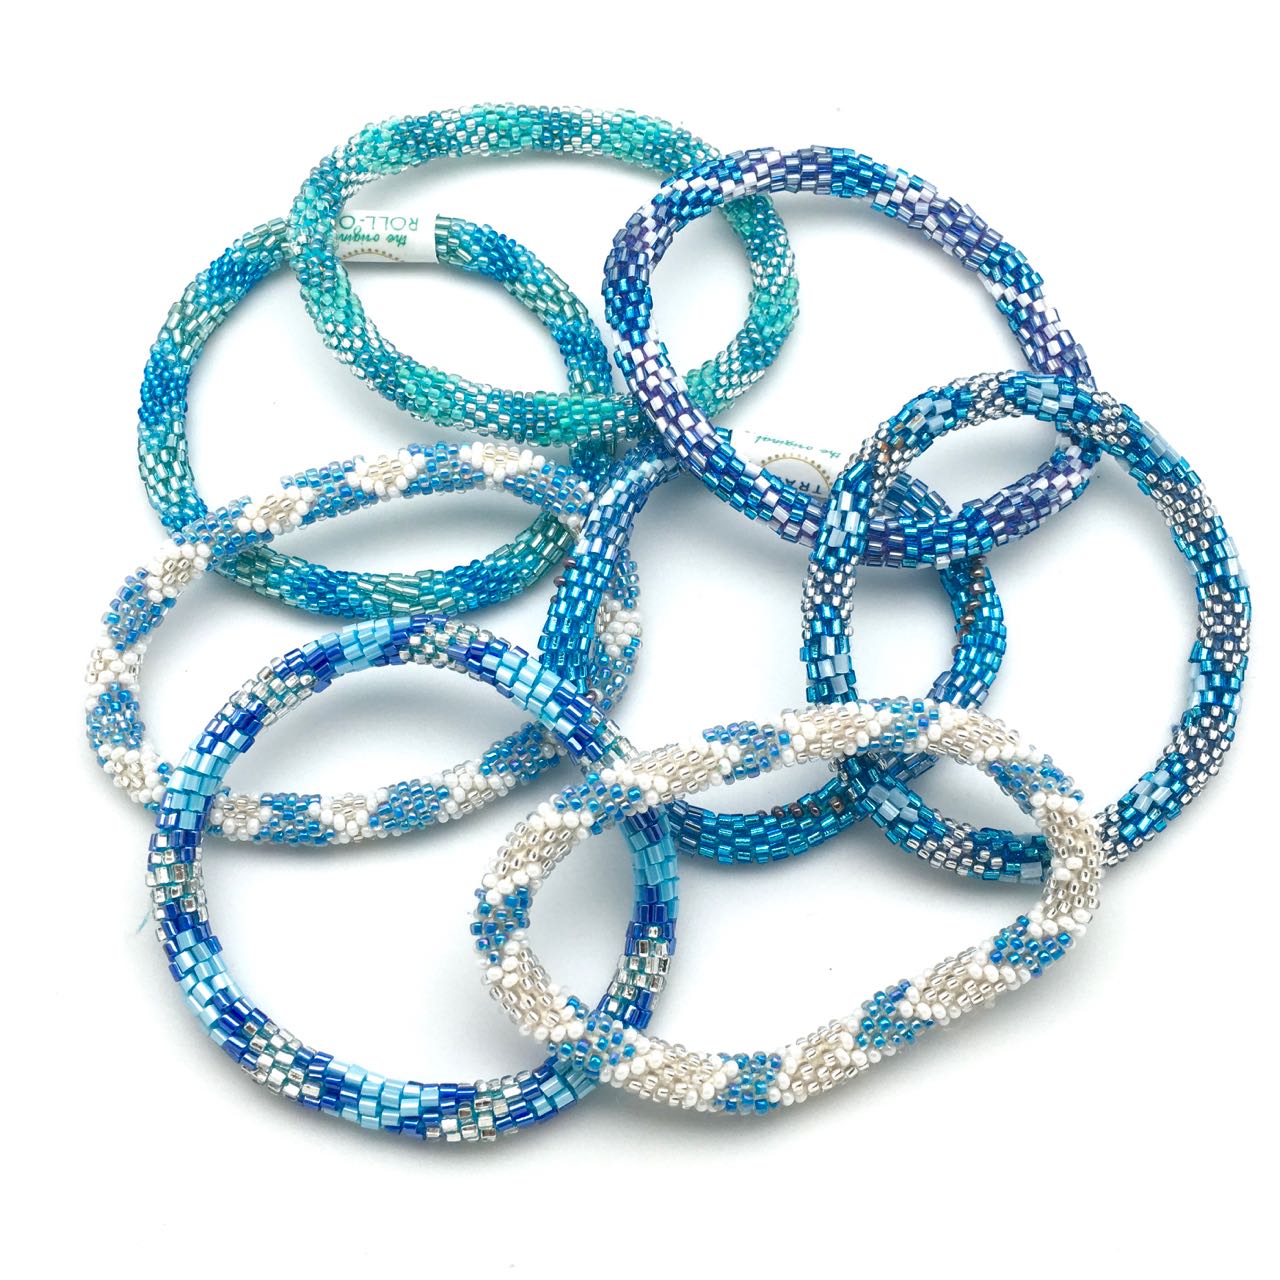 33 Fair Trade Bracelets  Handmade Ethical ideas  slow fashion handmade  bracelets handmade